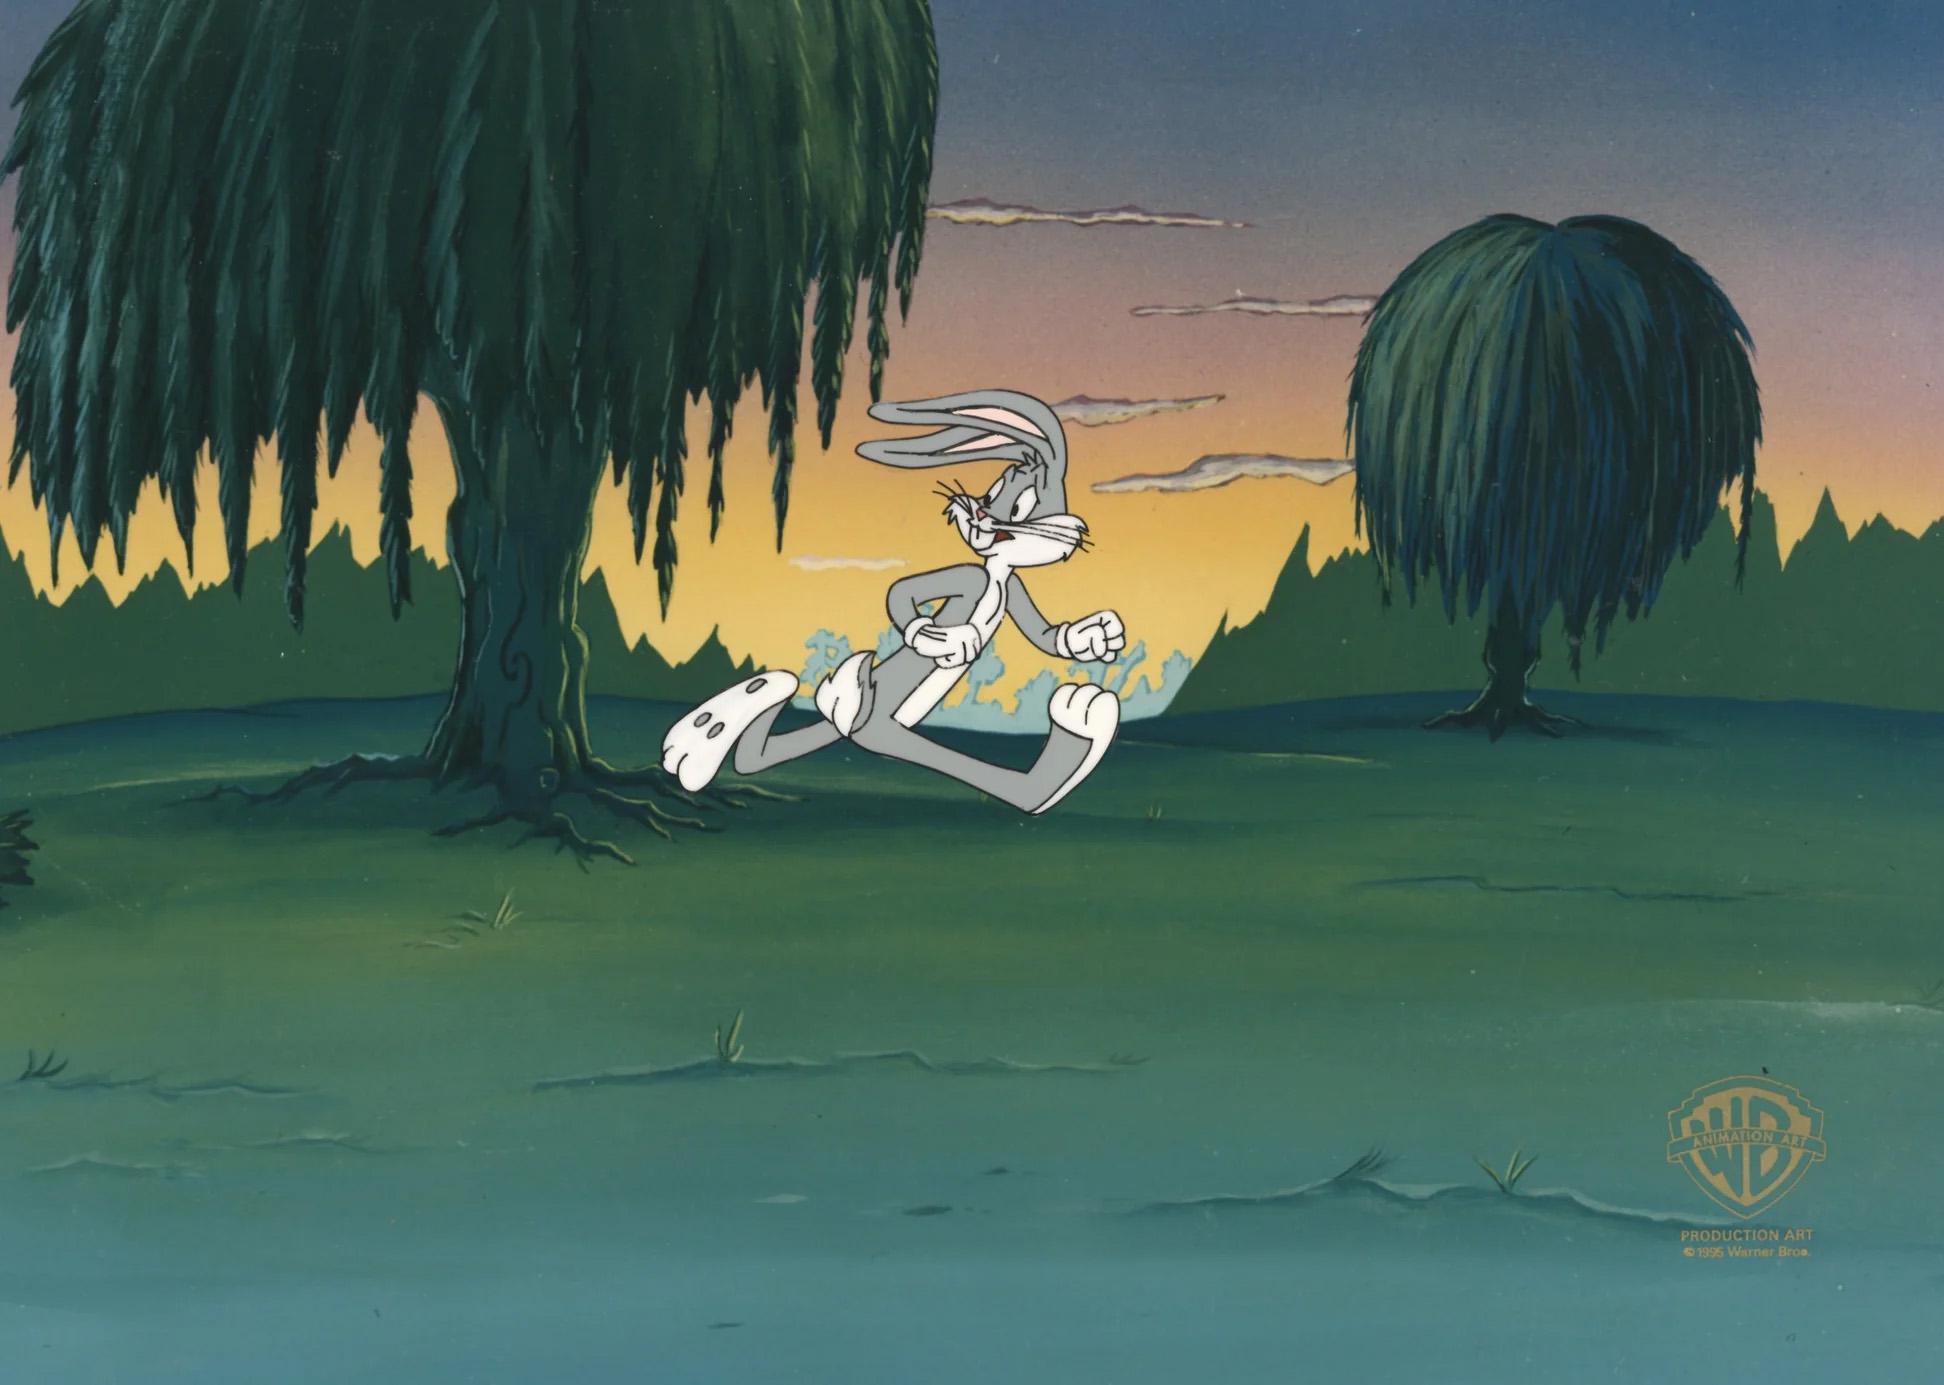 Looney Tunes Original Produktion Cel: Bugs Bunny – Art von Looney Tunes Studio Artists